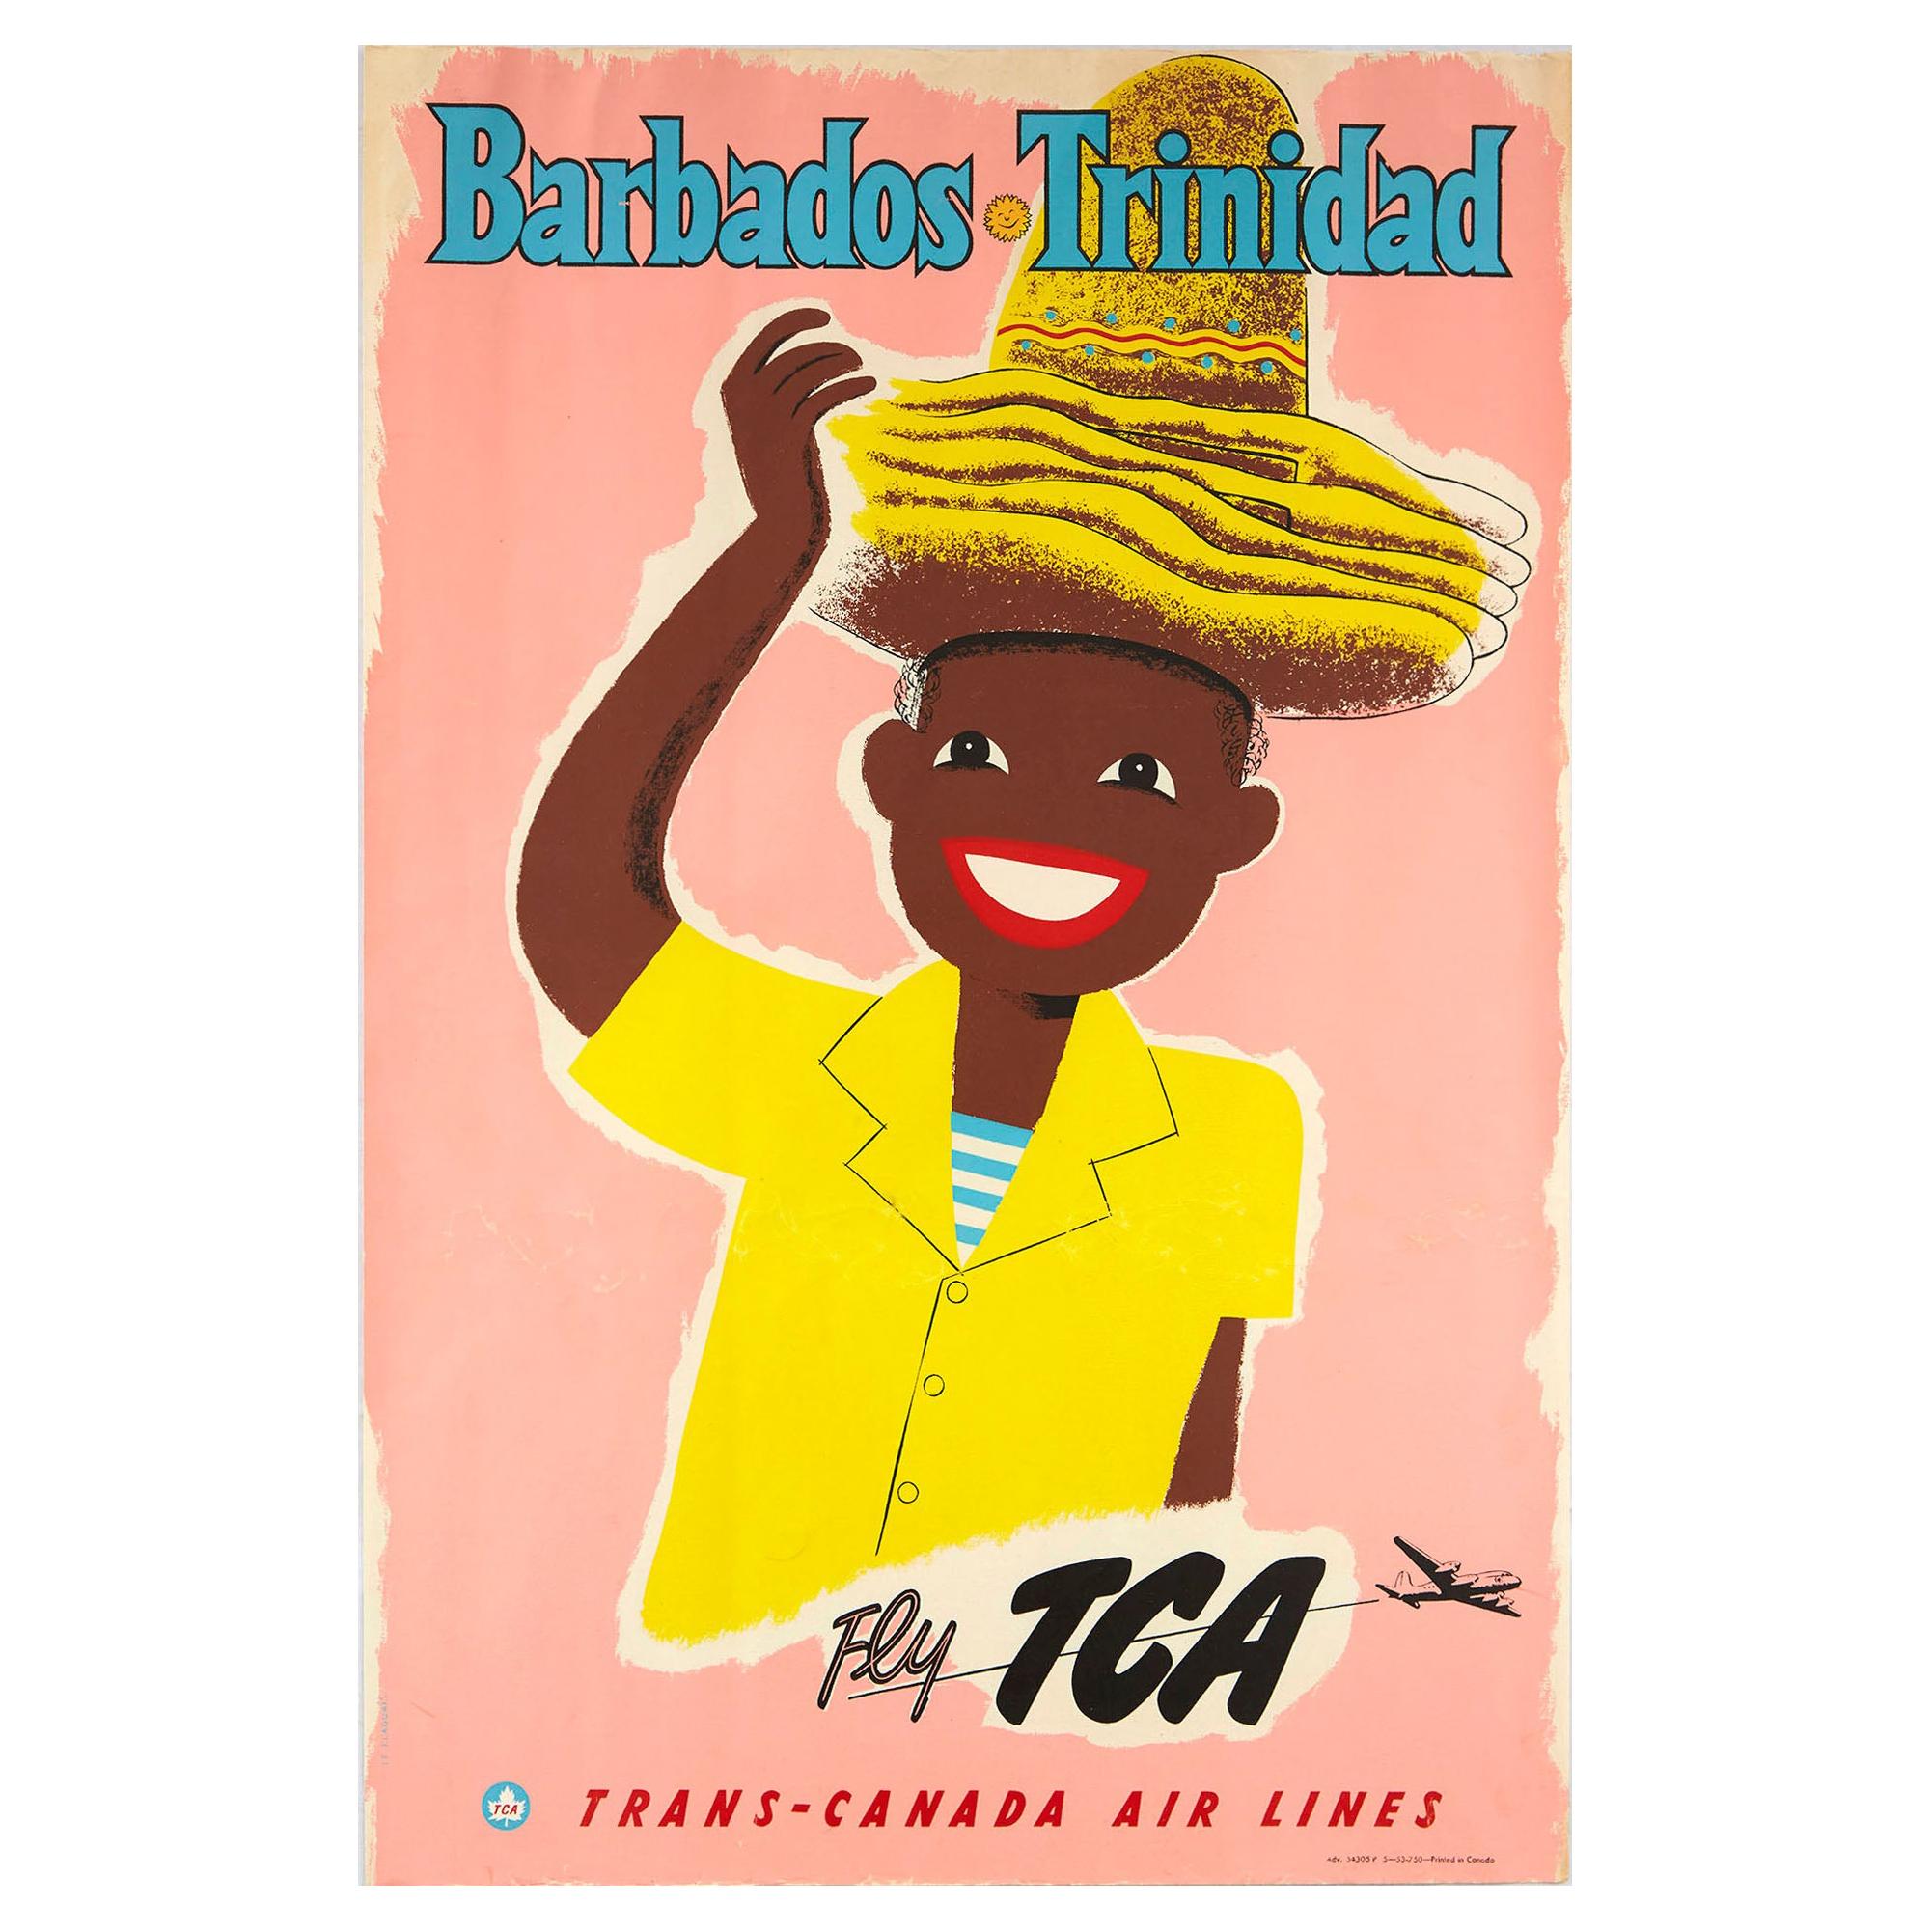 Original Vintage Travel Poster Barbados Trinidad Fly TCA Trans Canadian Airlines